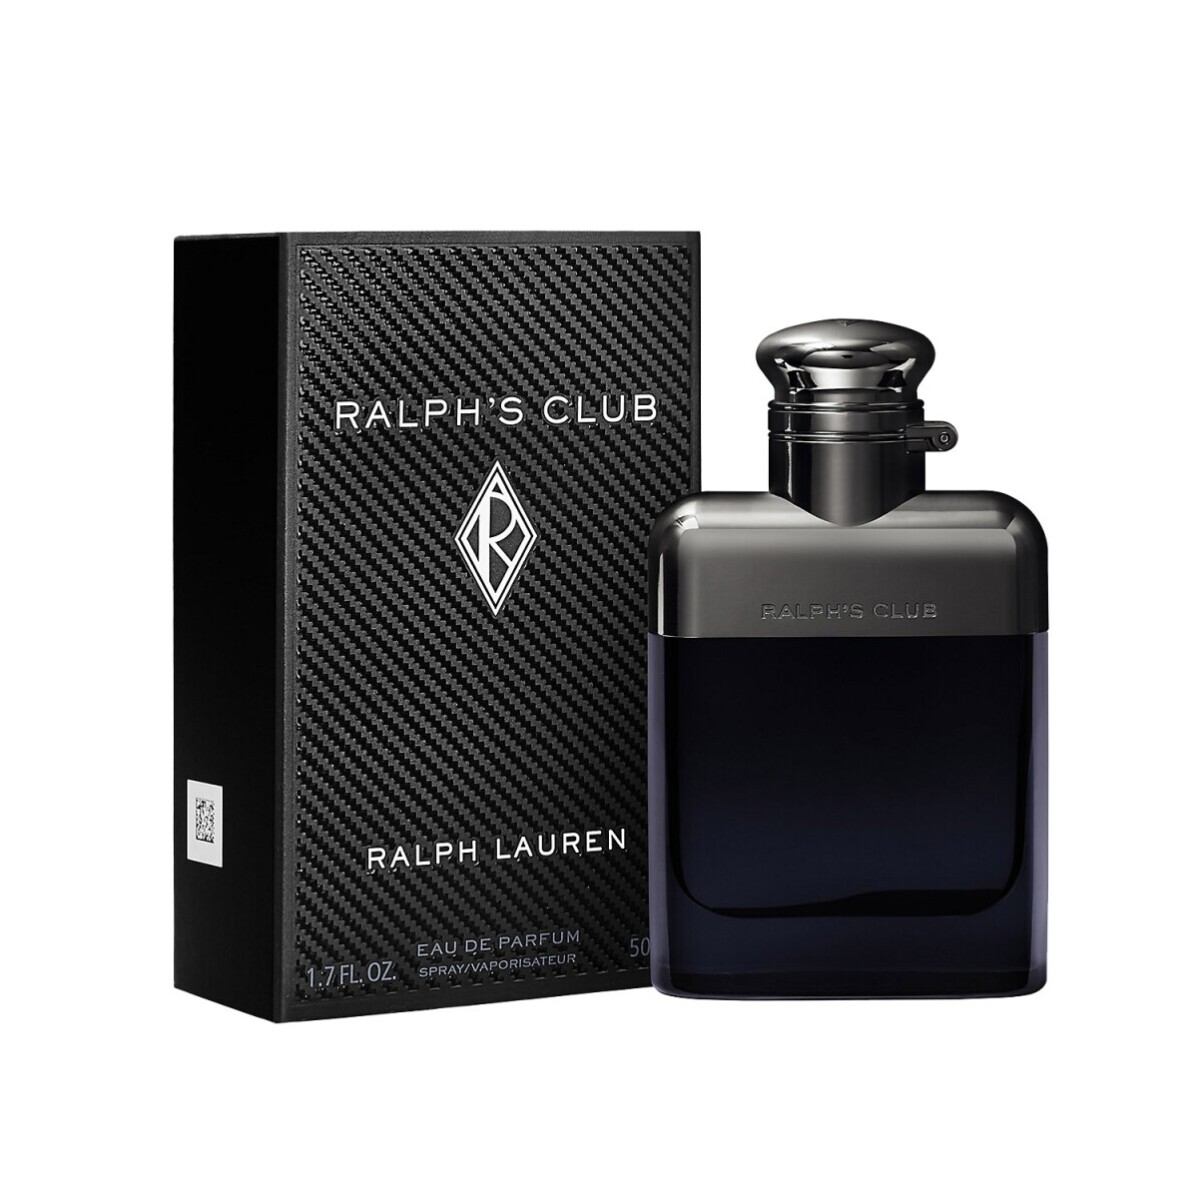 Perfume Ralph's Club Parfum 50 Ml. 